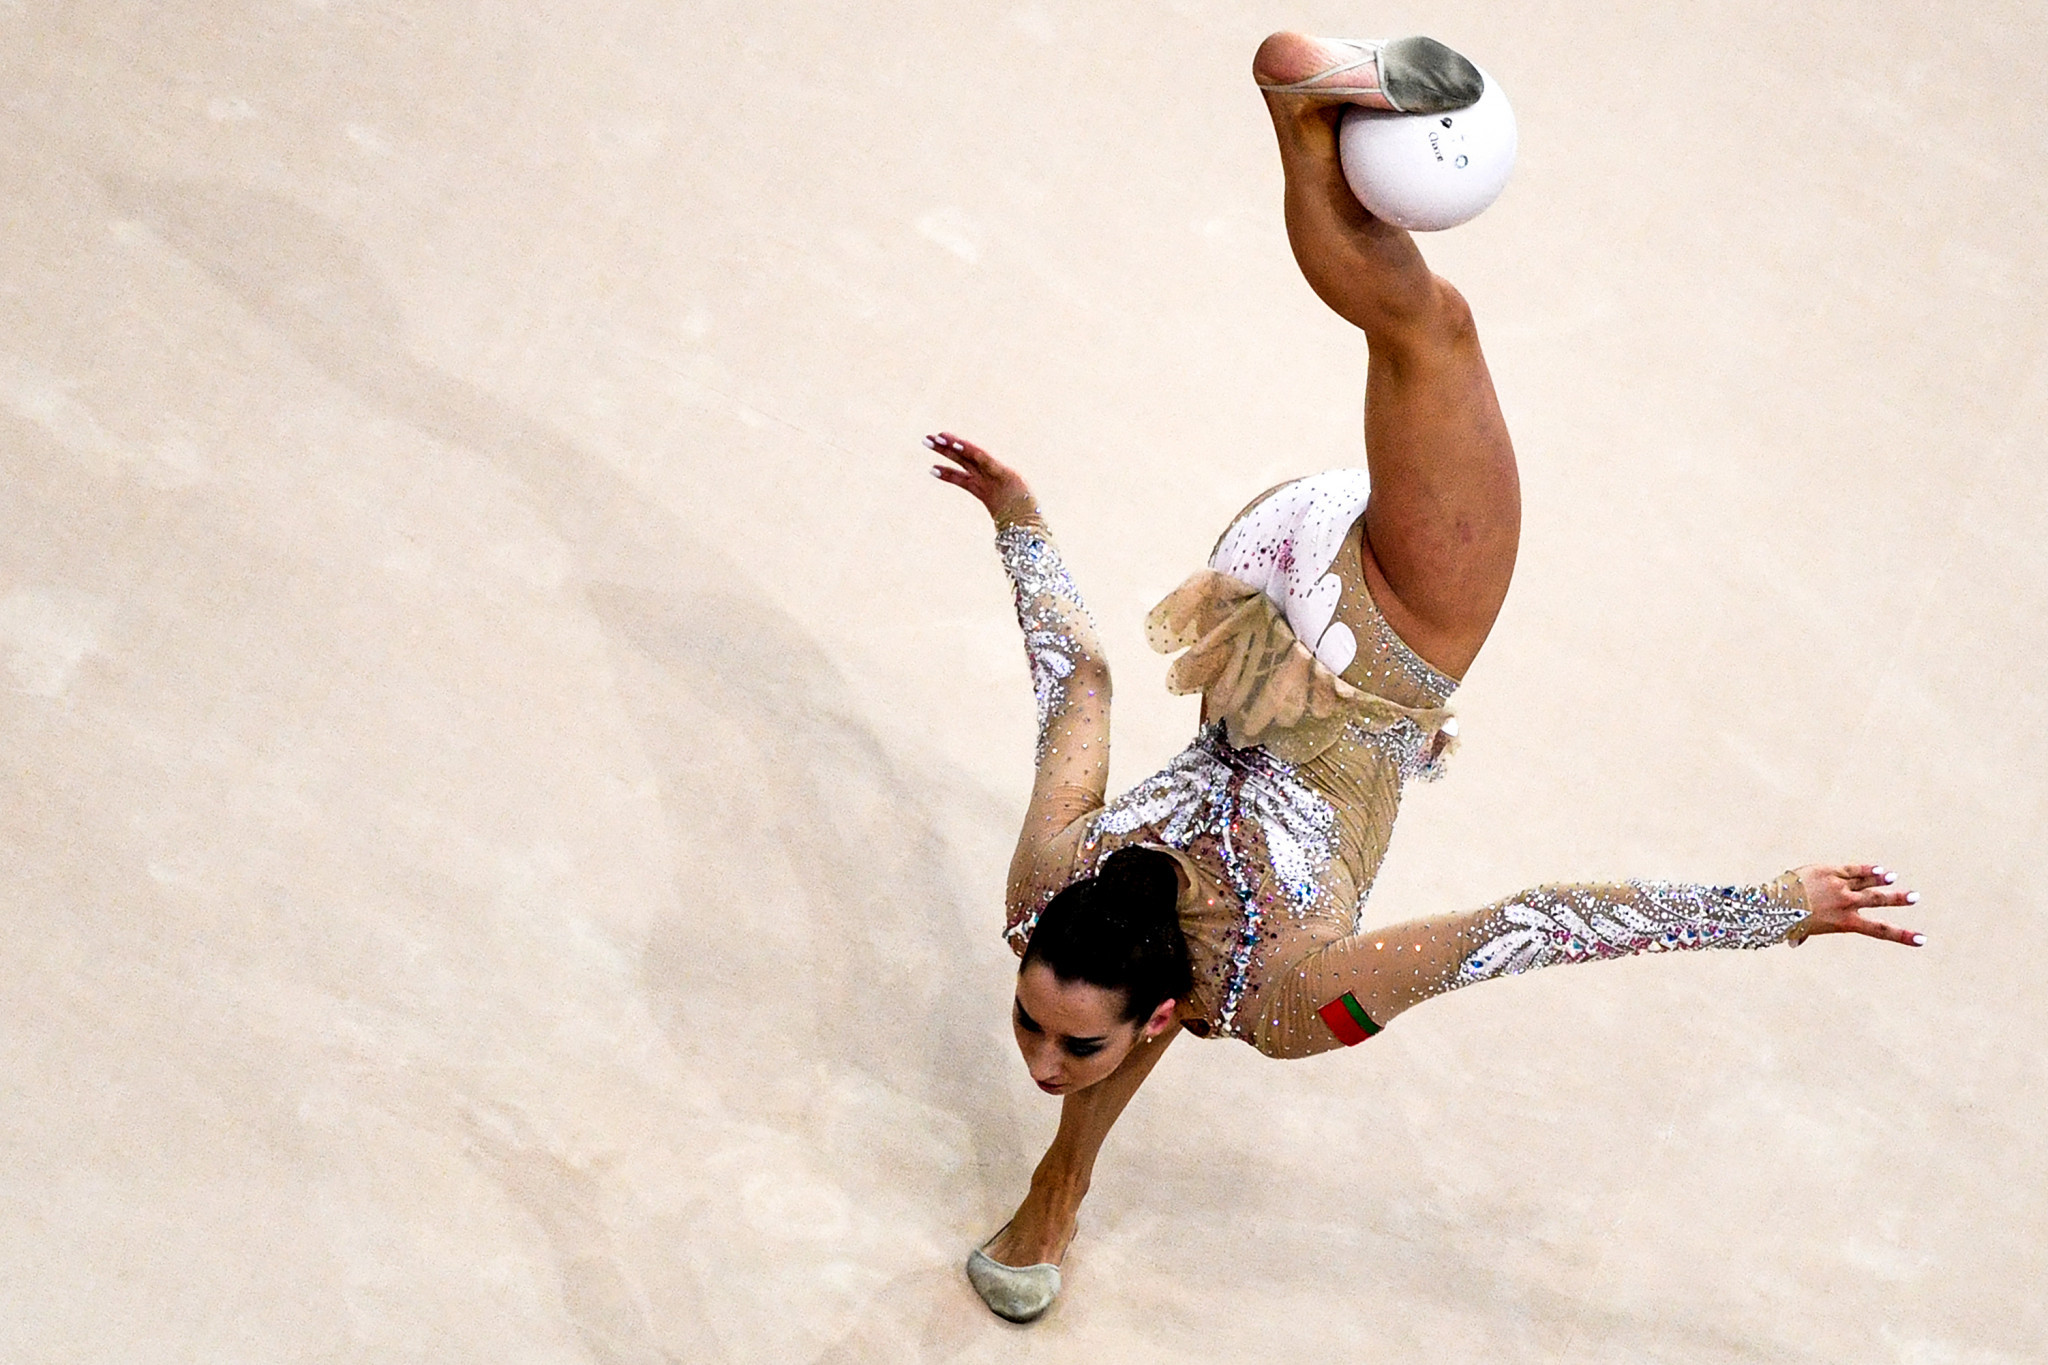 Rhythmic gymnastics also began at the same venue, Minsk Arena ©Getty Images